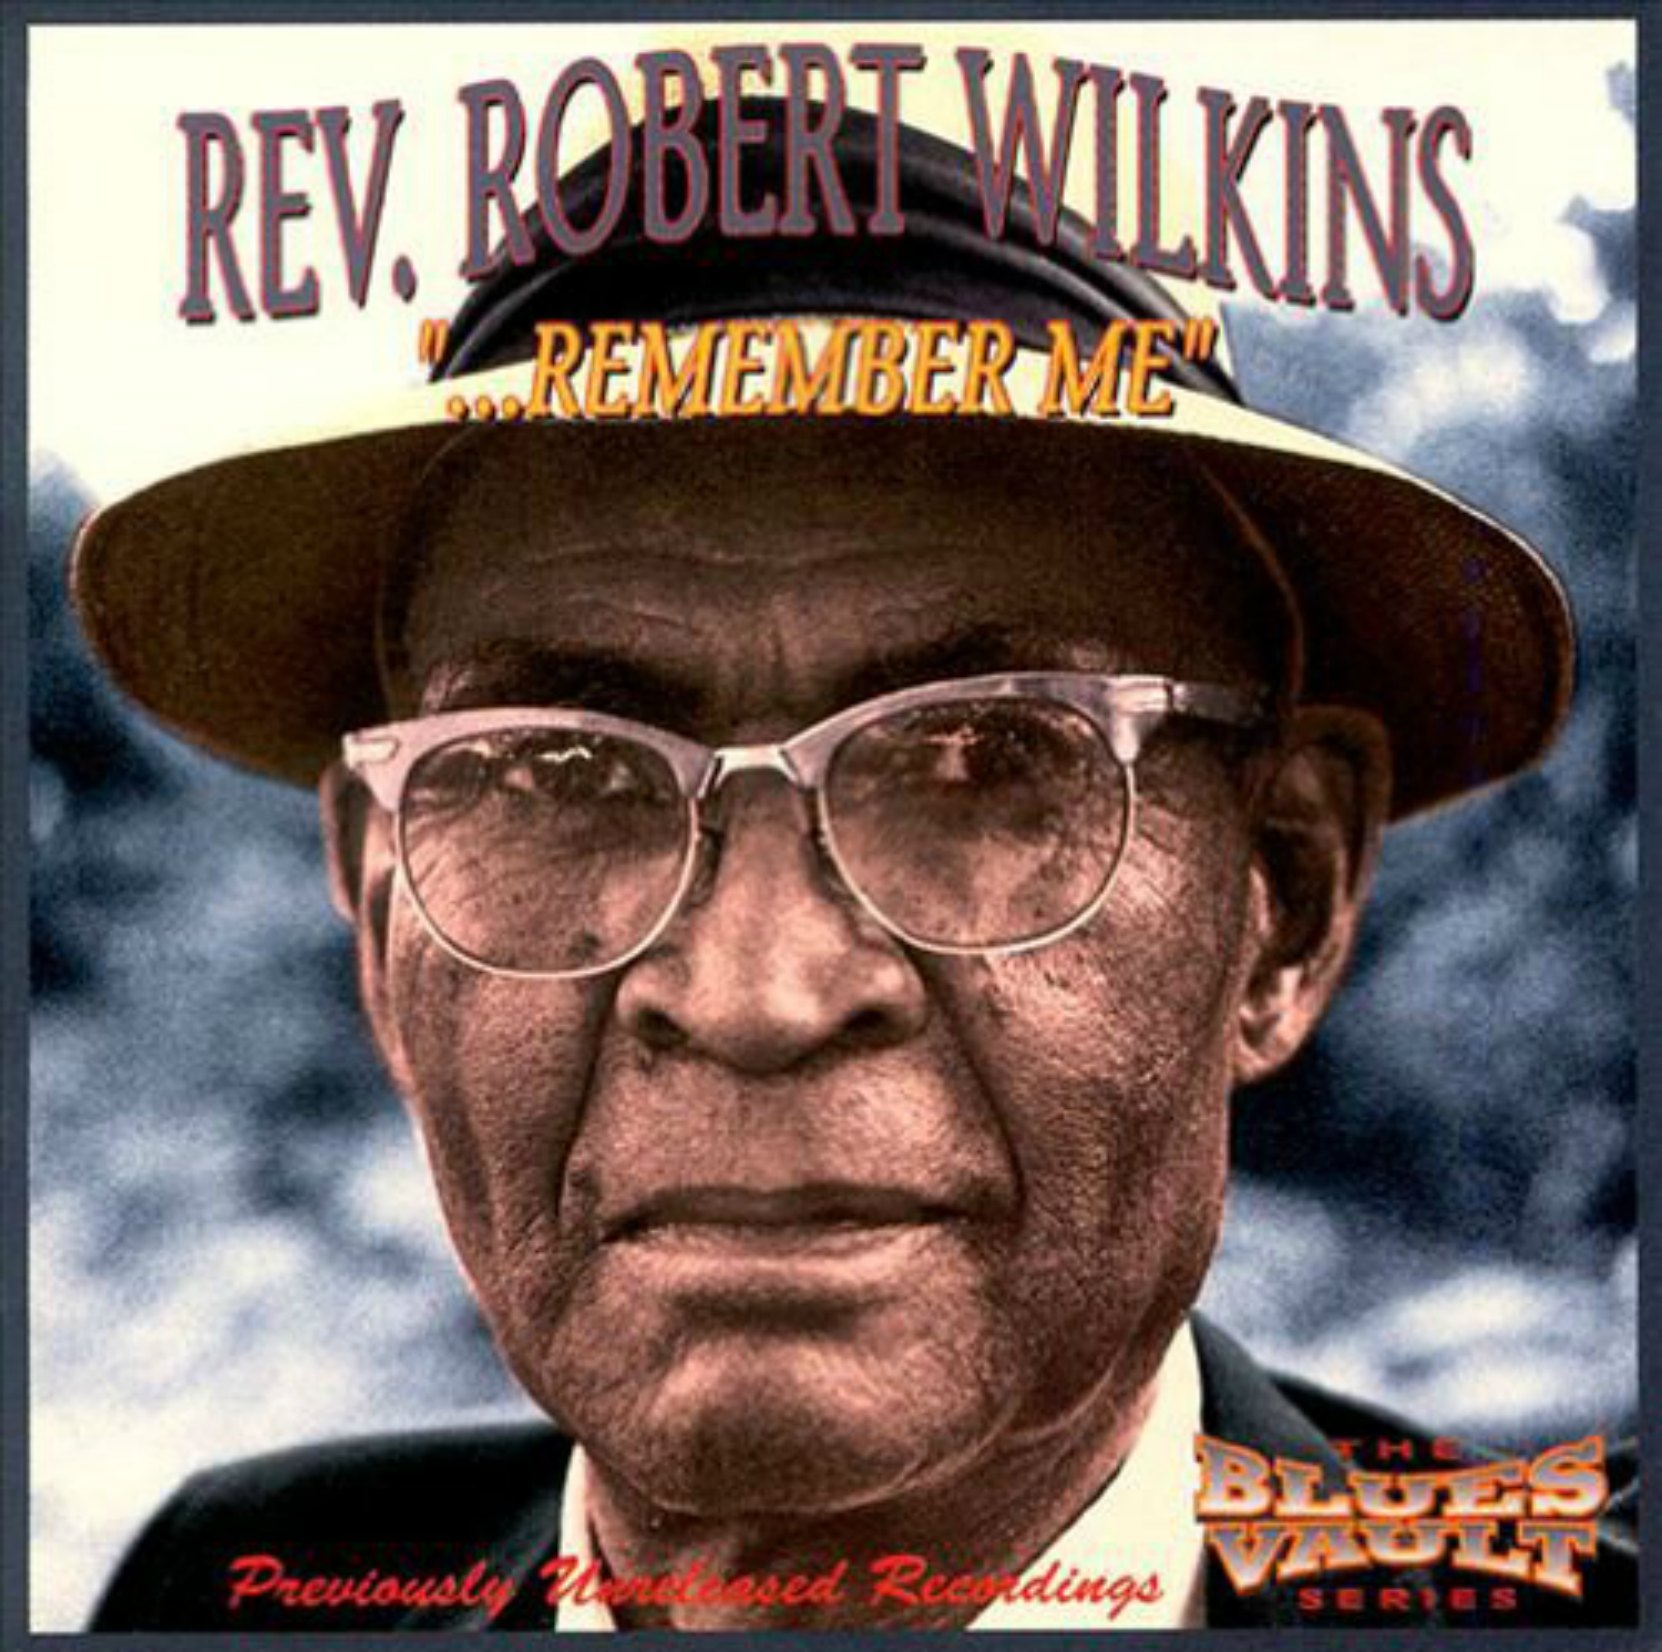 CD cover, Remember Me by Reverend Robert Wilkins.